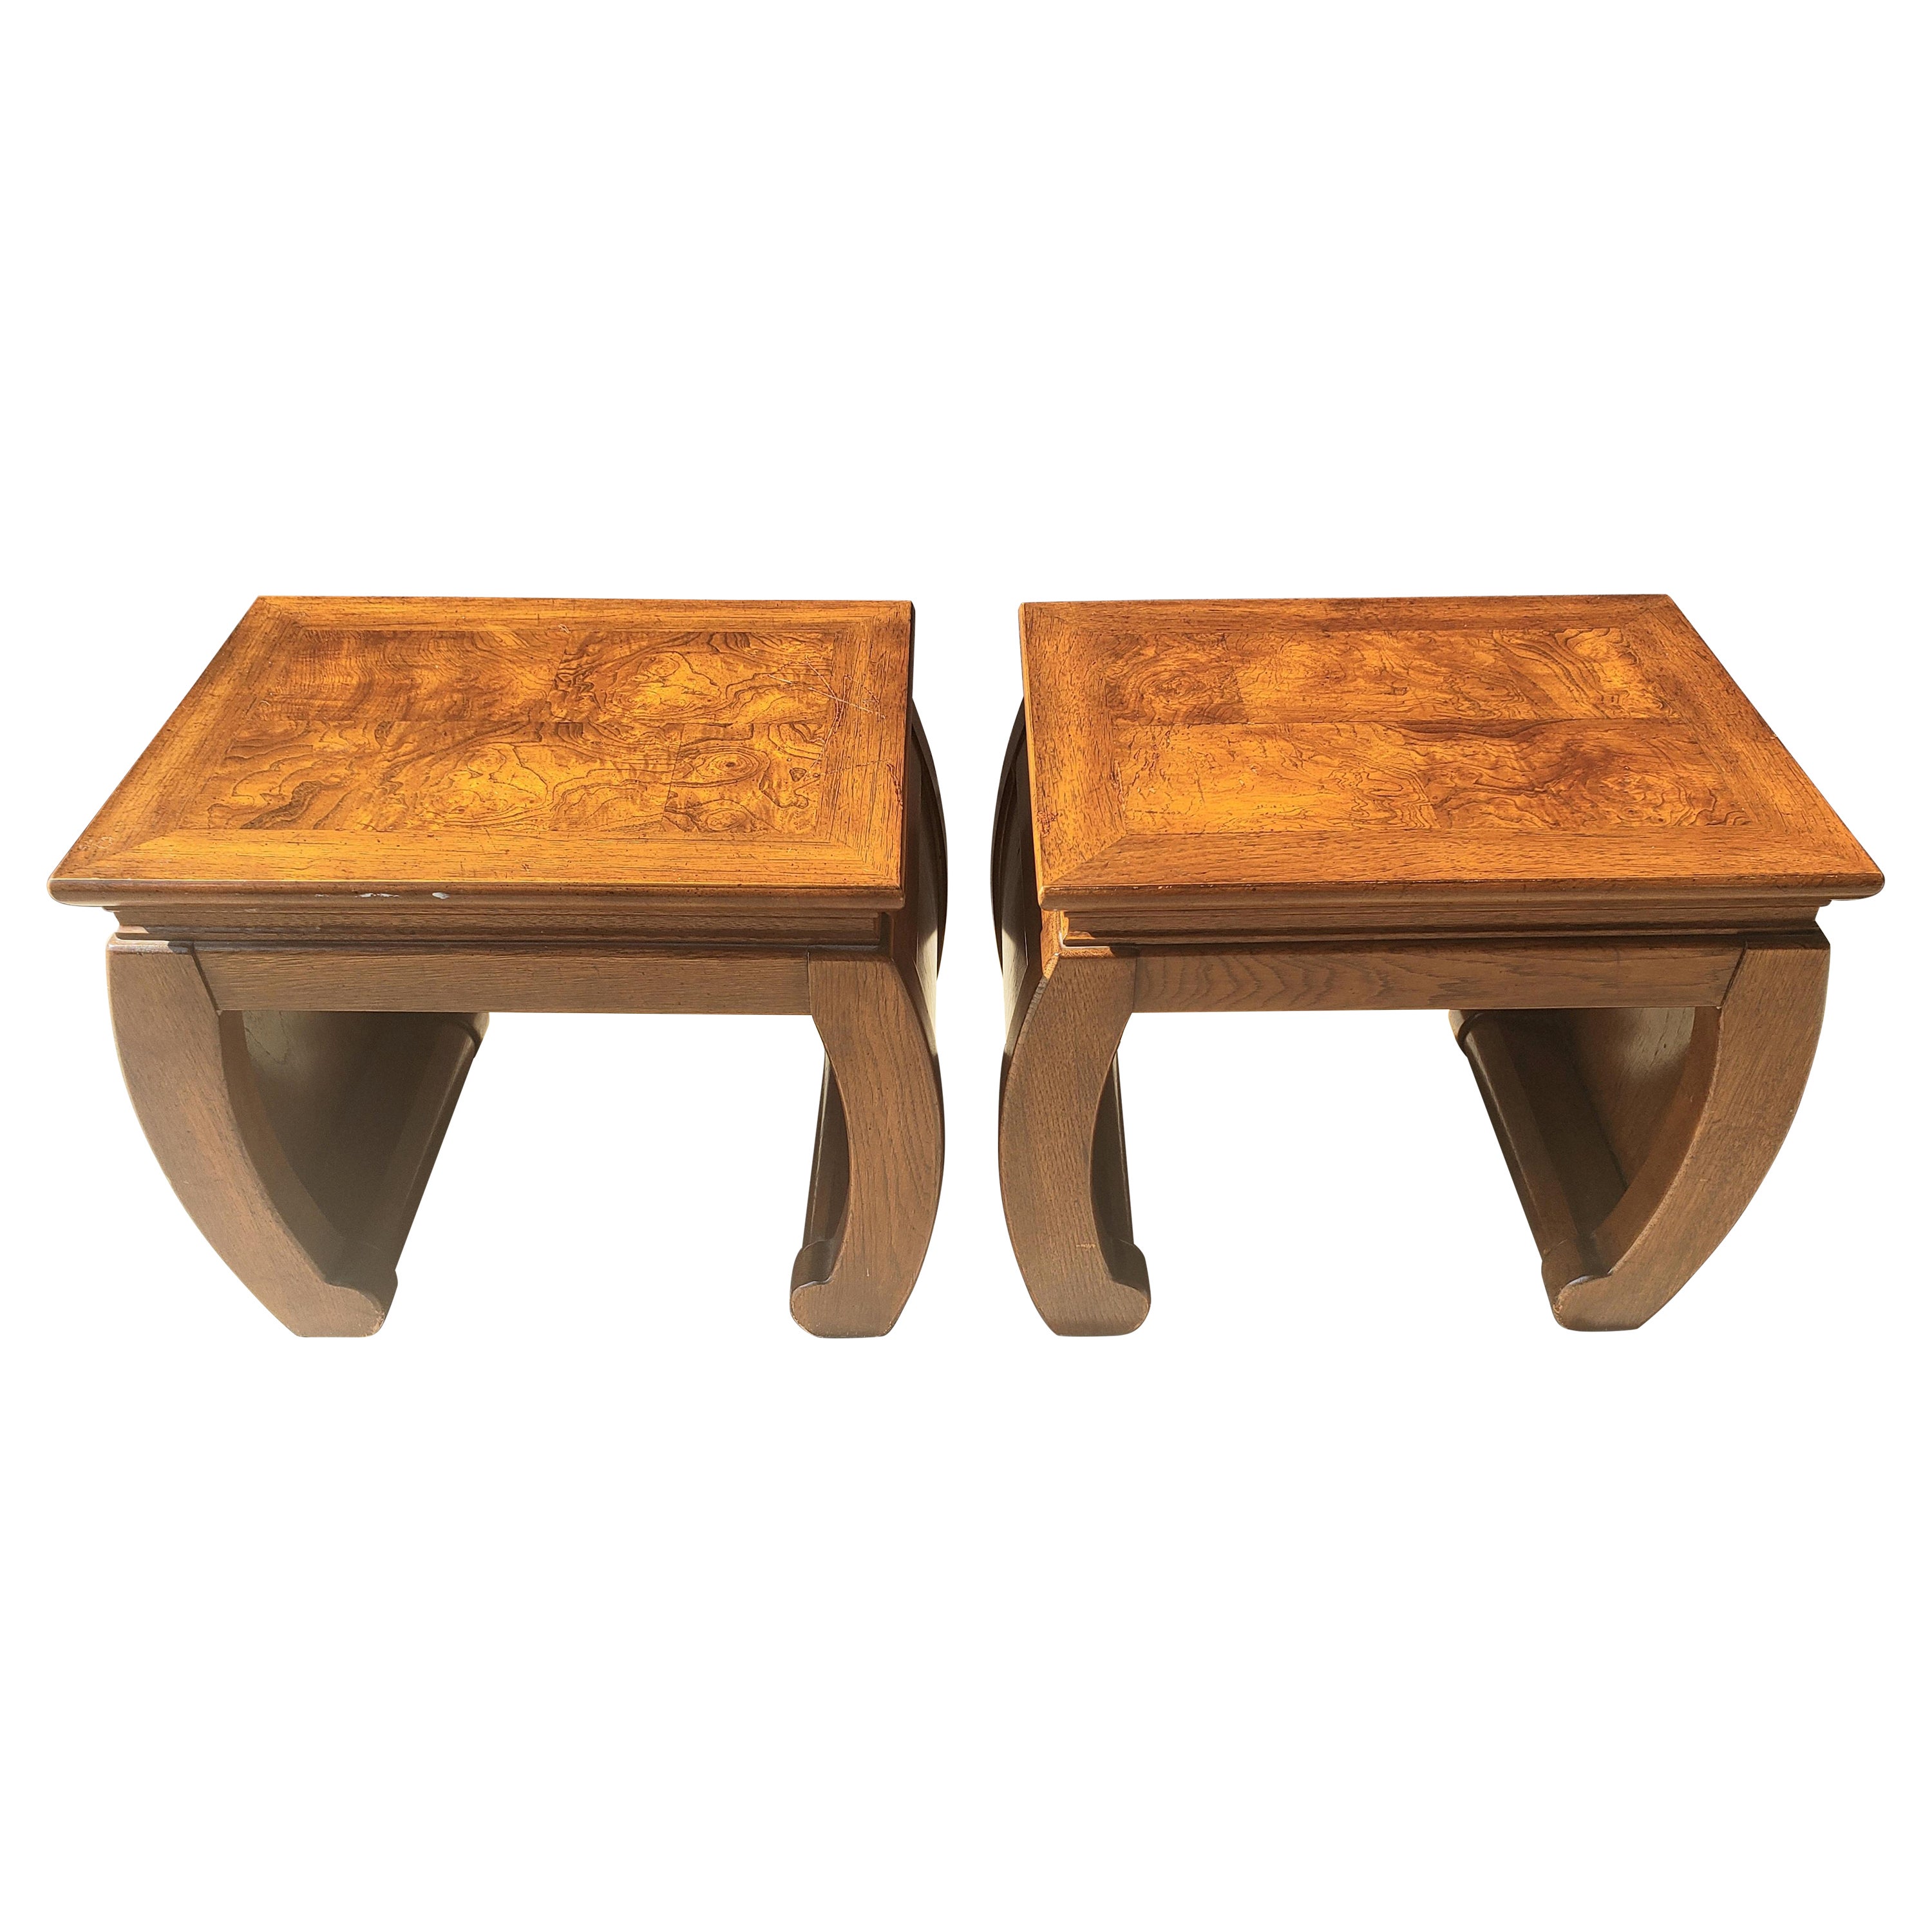 Gordons Fine Furniture Asian Design Fruitwood Burl Side Tables, a Pair